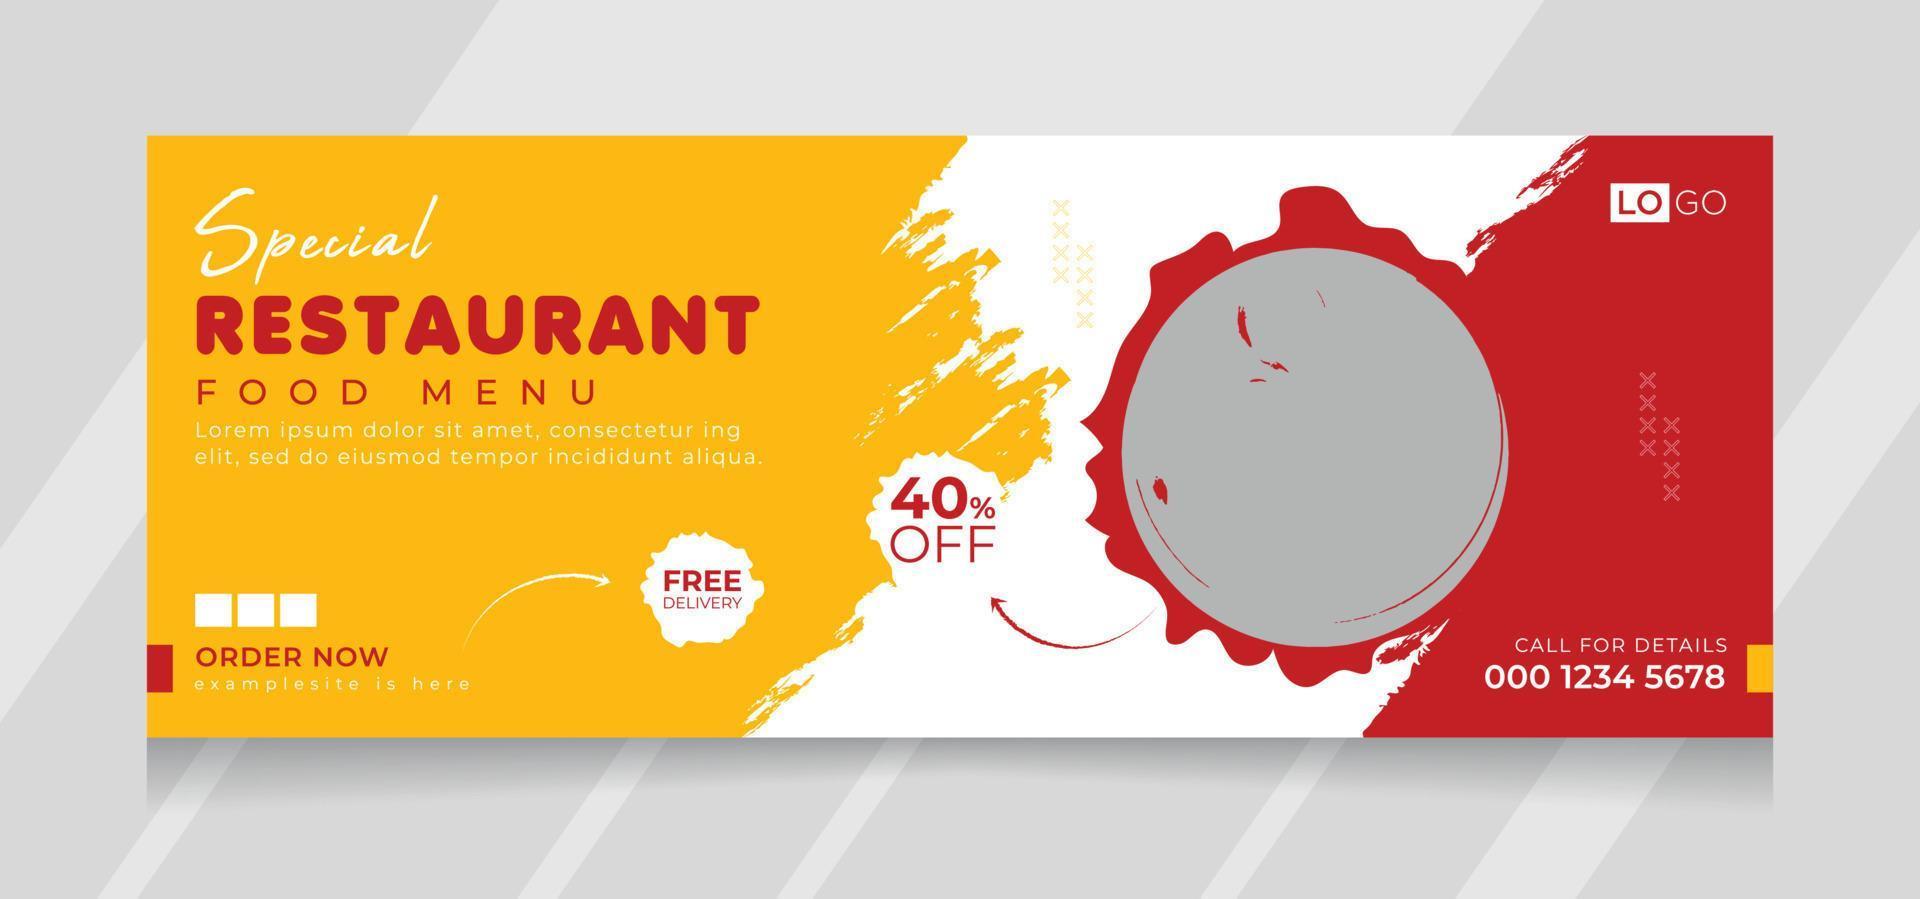 Restaurant food menu social media cover banner template vector